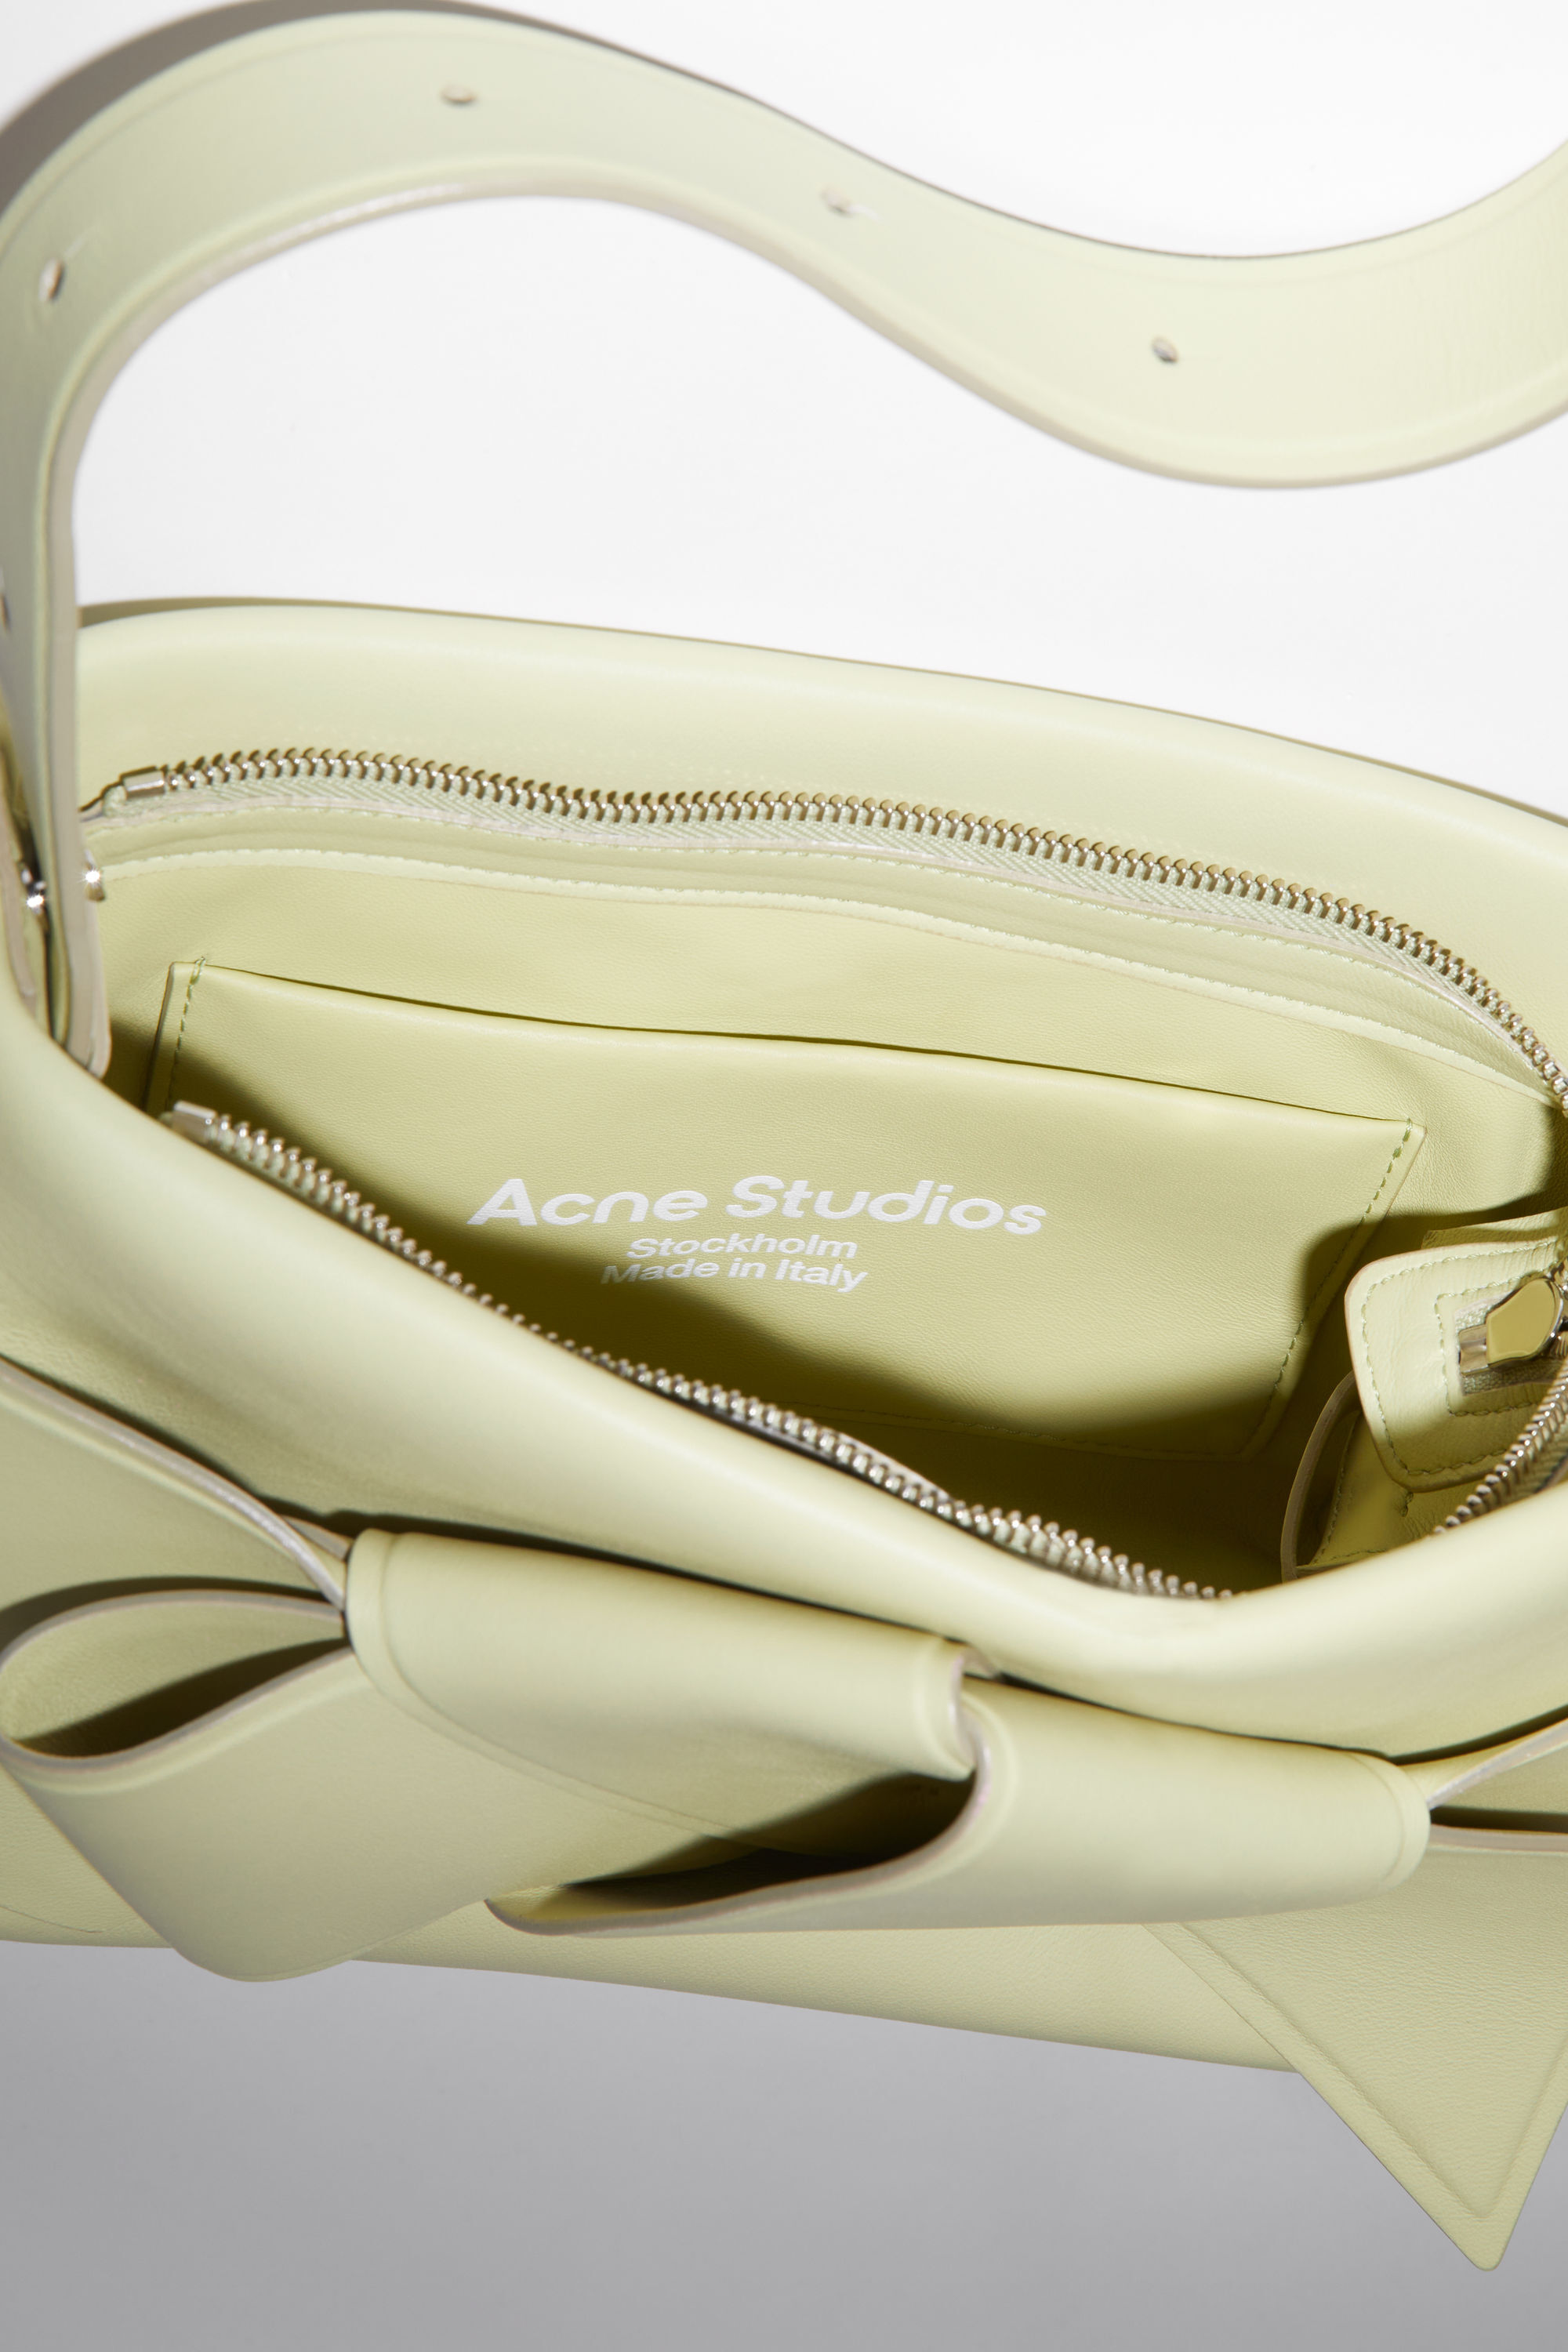 Acne Studios Multipocket Micro Bag in Dark Brown | Voo Store Berlin |  Worldwide Shipping